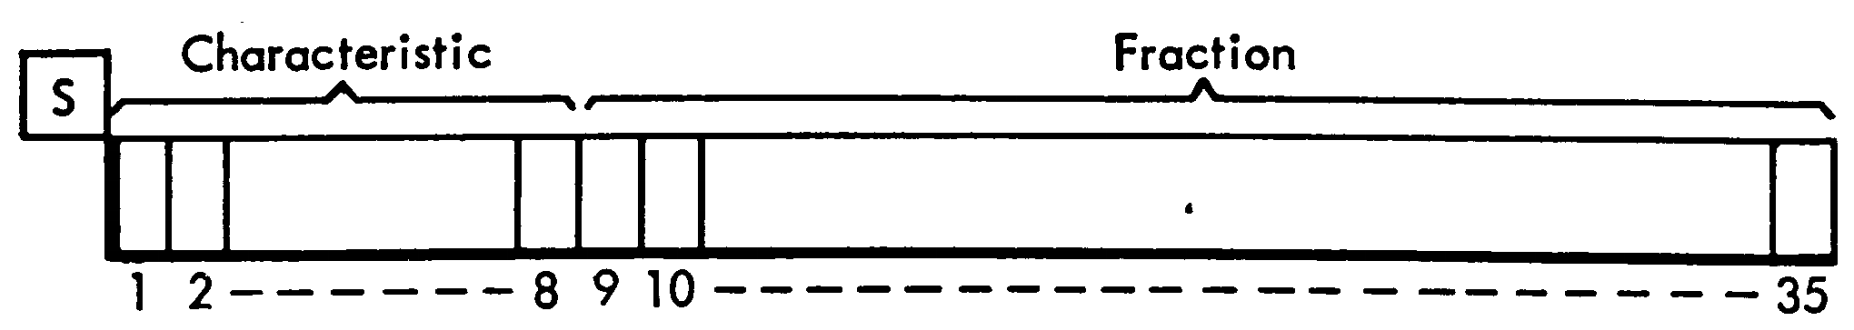 Diagram illustrating use of bits in
    IBM 704 floating point number